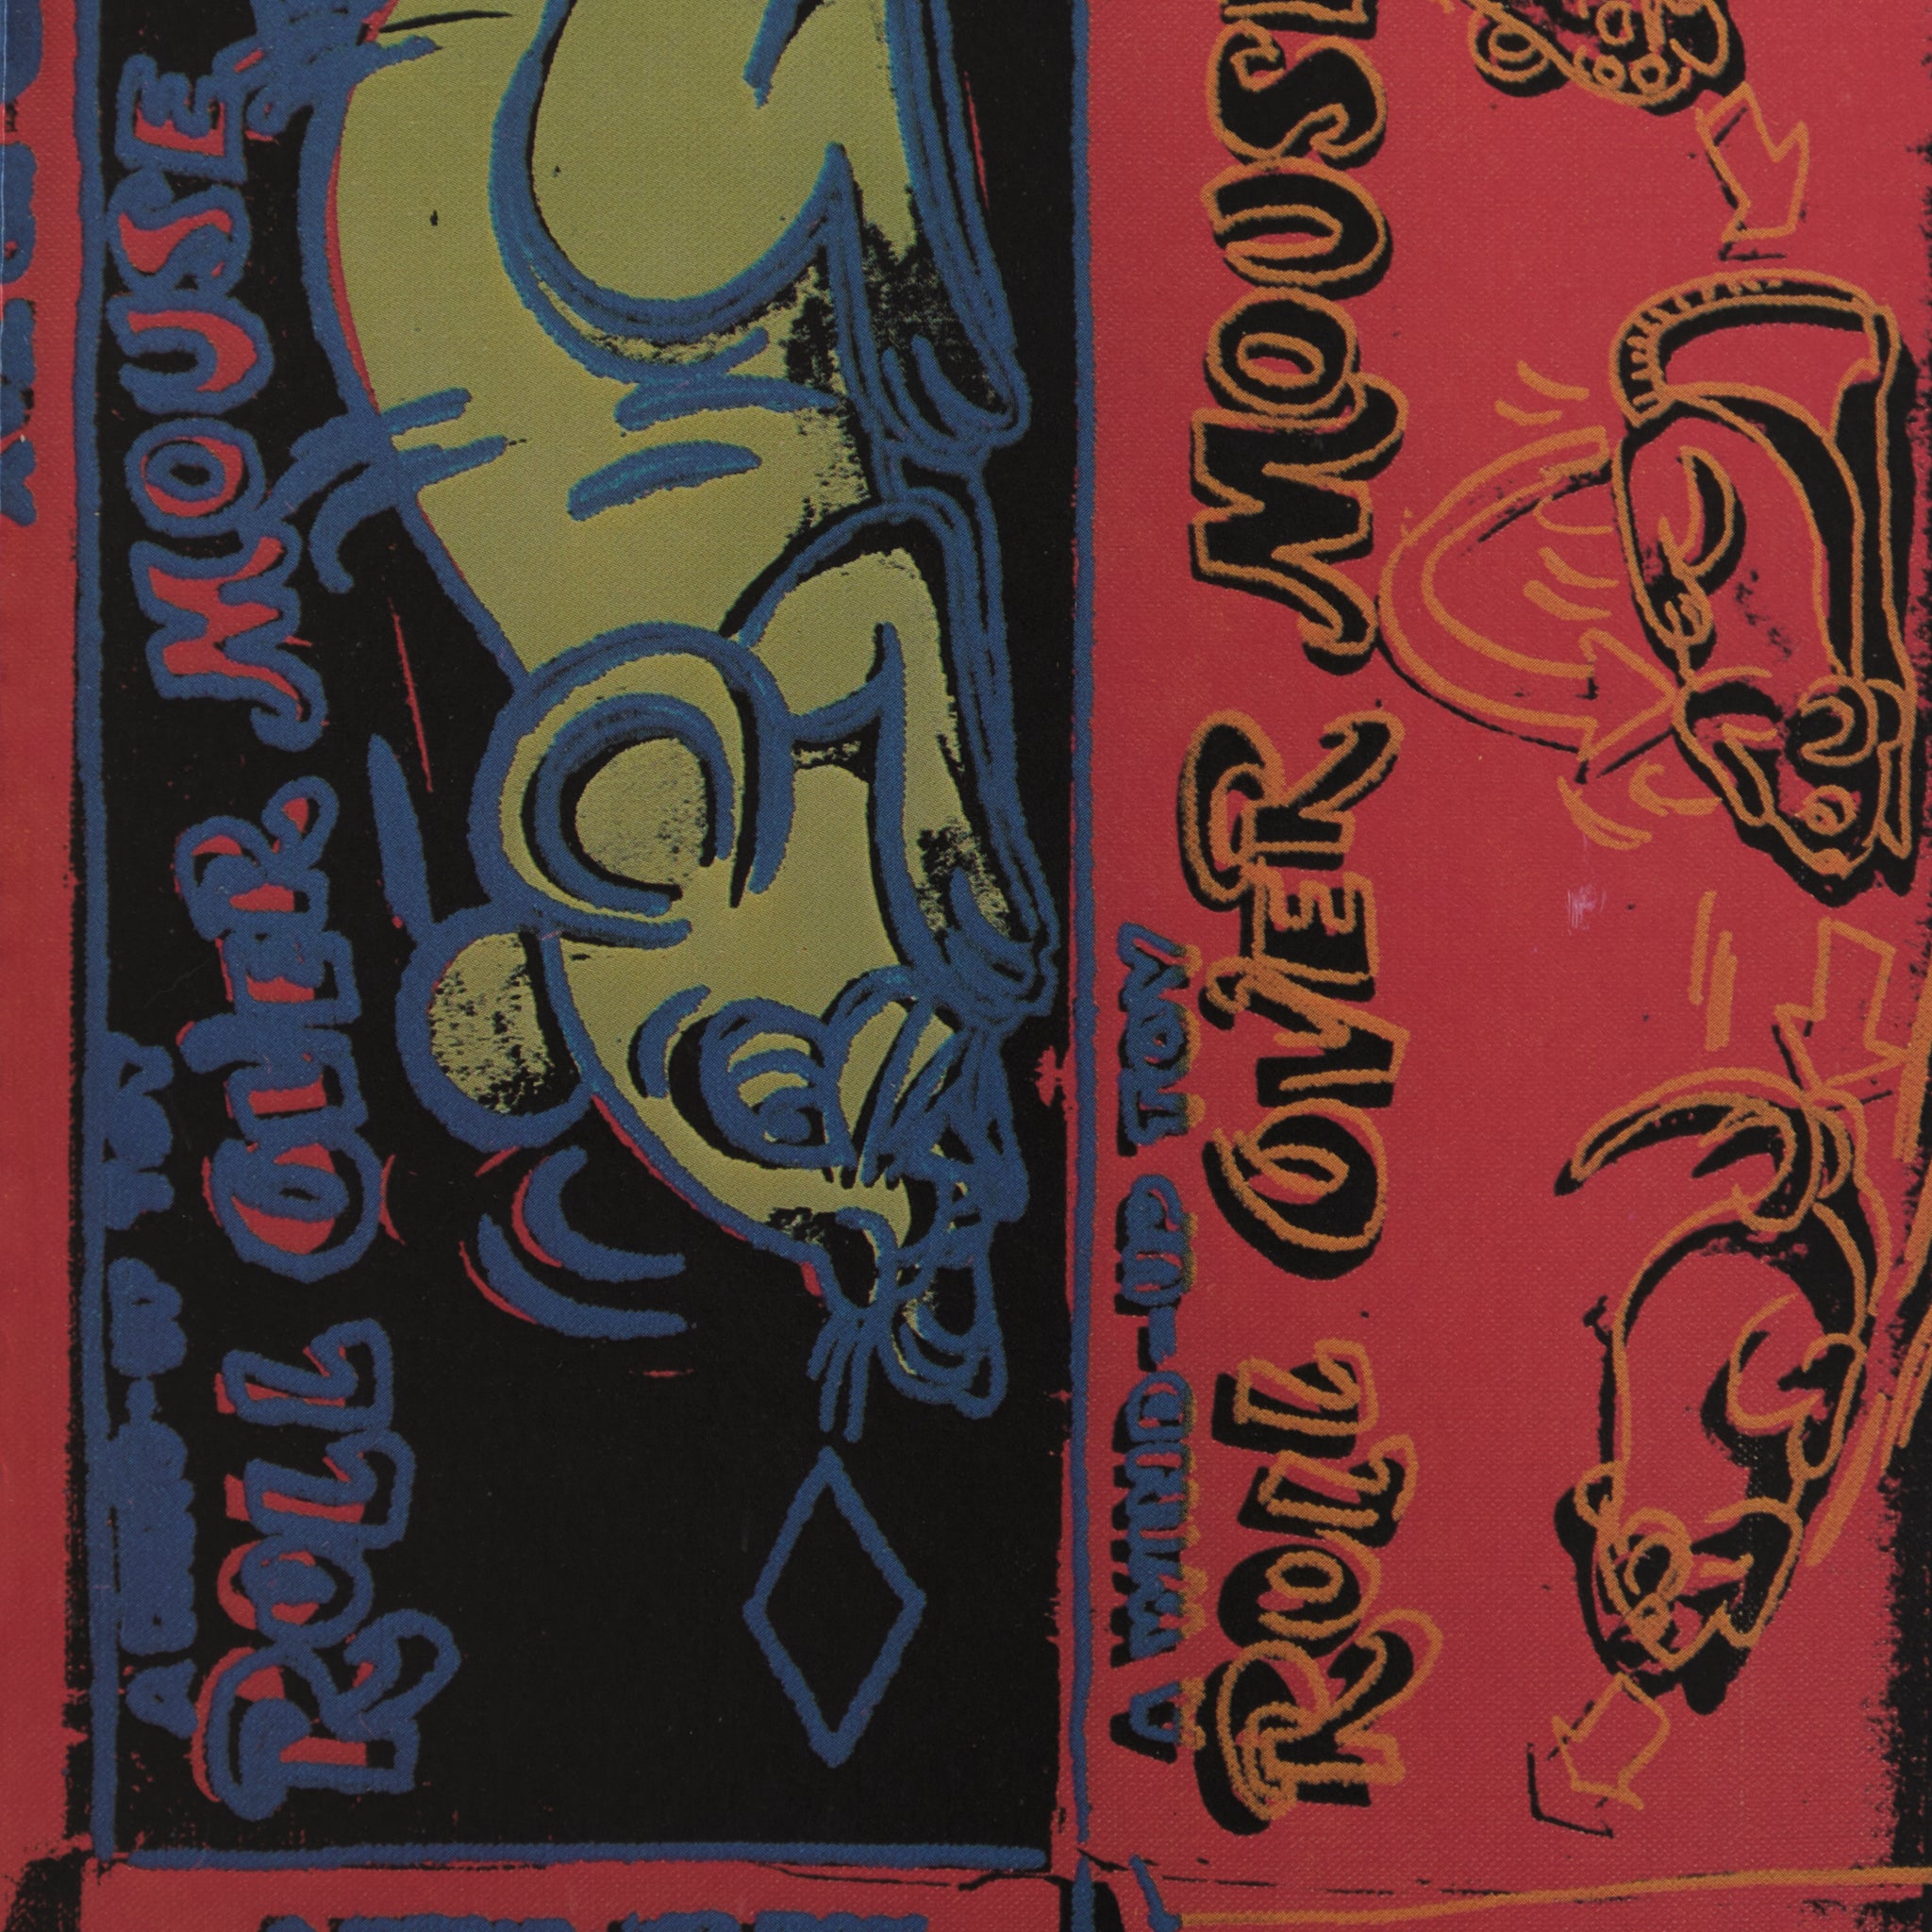 Andy Warhol — Children's Book